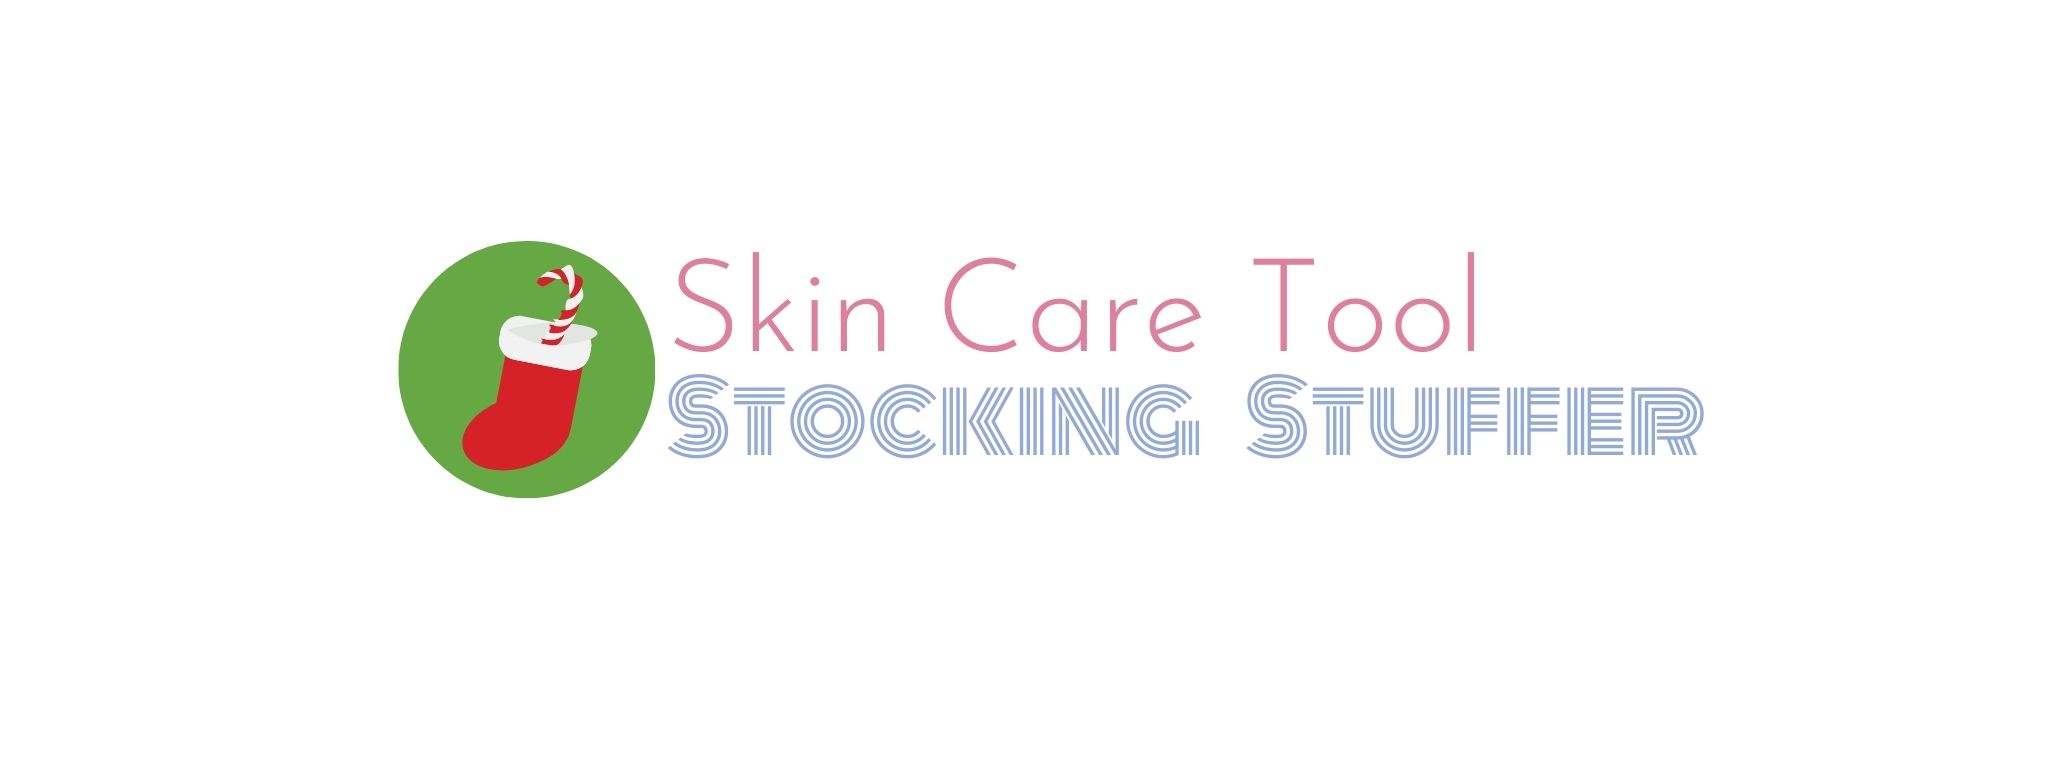 best skin care stocking stuffer